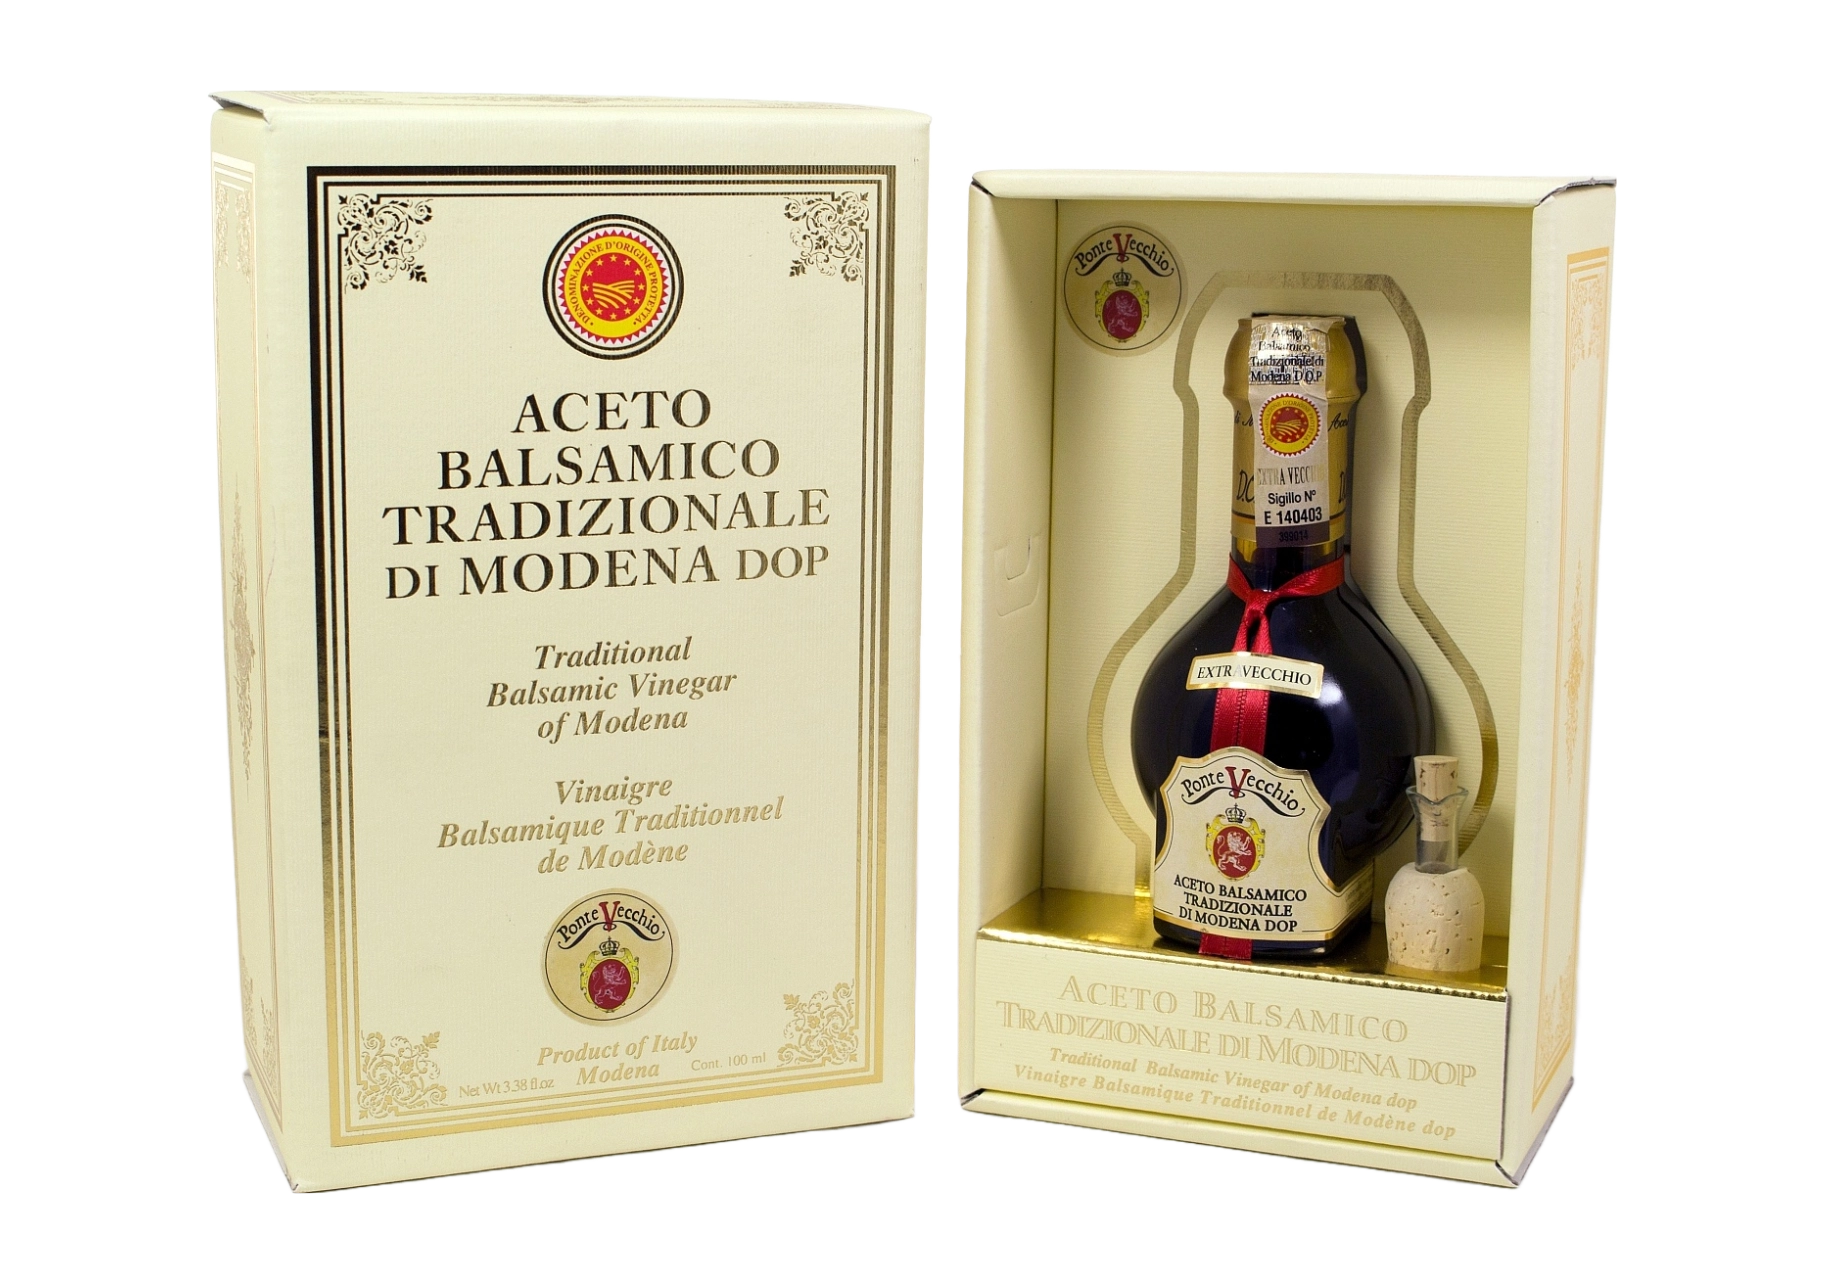 Aceto Balsamico Tradizionale DOP-25 Year By Ponte Vecchio